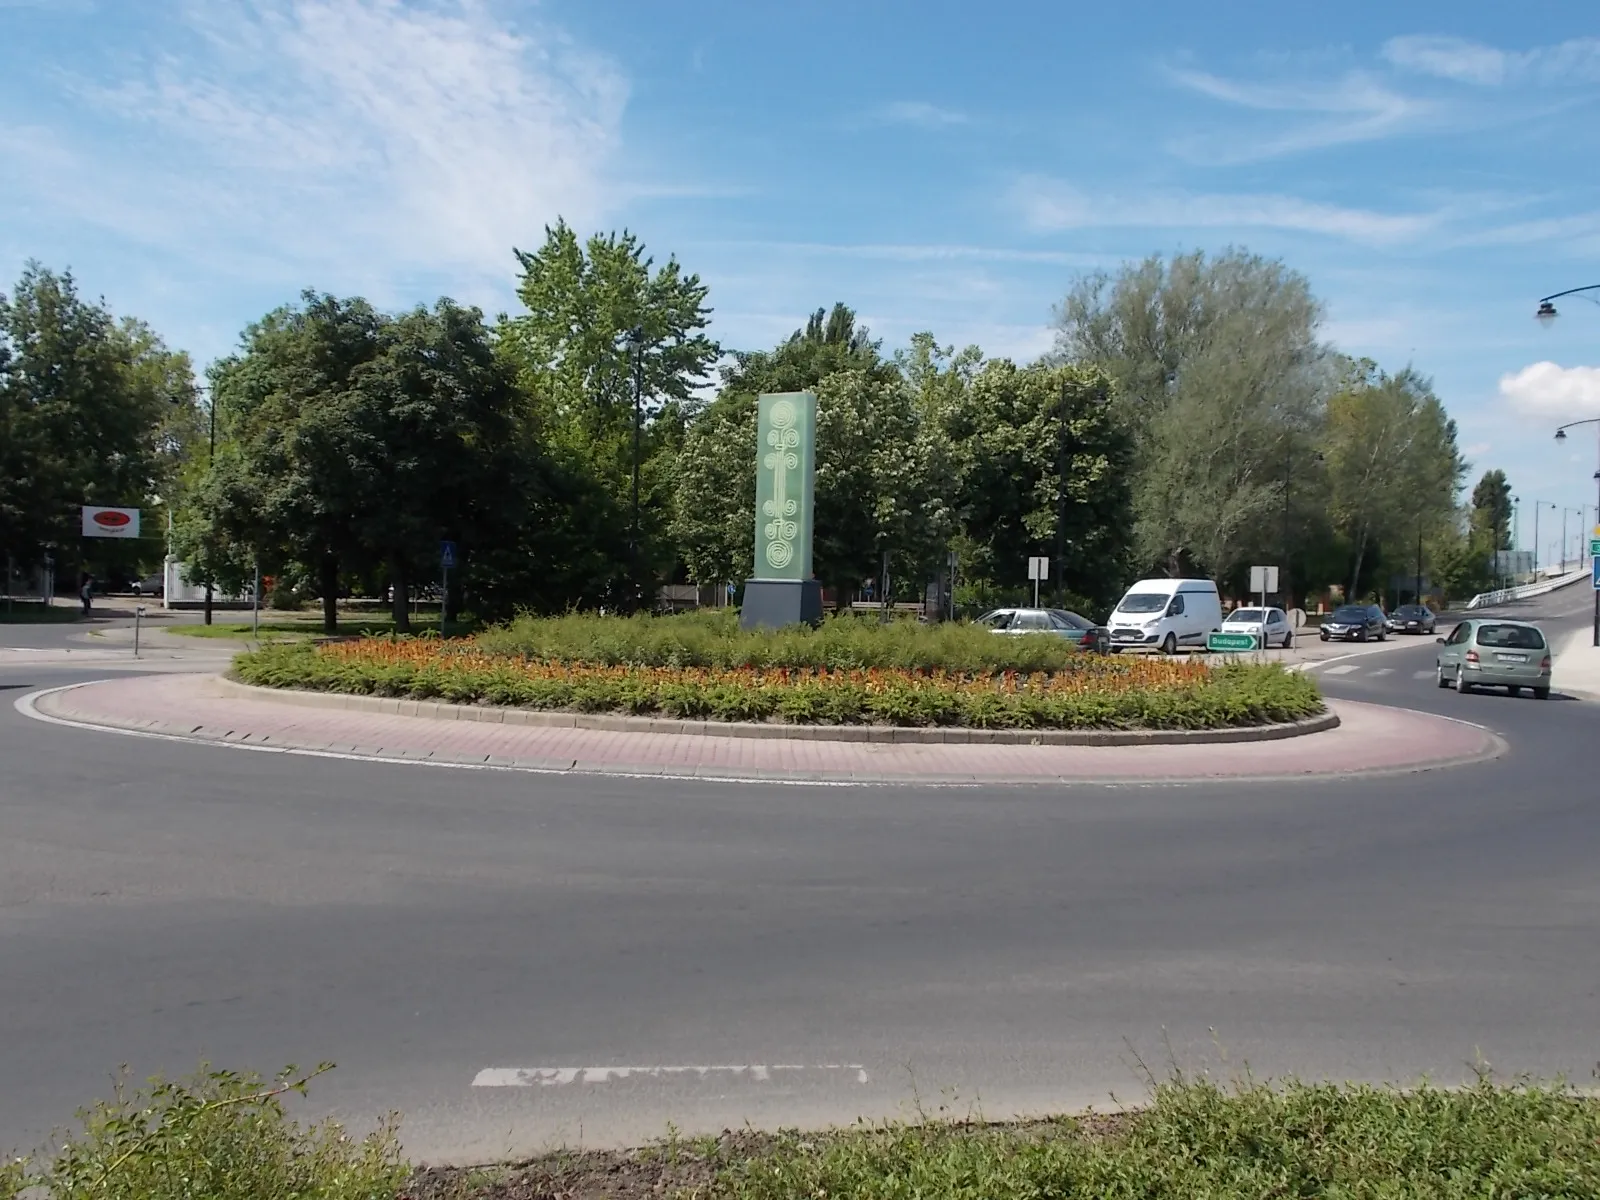 Photo showing: : Radnóti roundabouts with glass? obelisk?. Aranyfácán Product Kft. - Food&Beverage Company. - Radnóti Square, Hatvan, Heves County, Hungary.